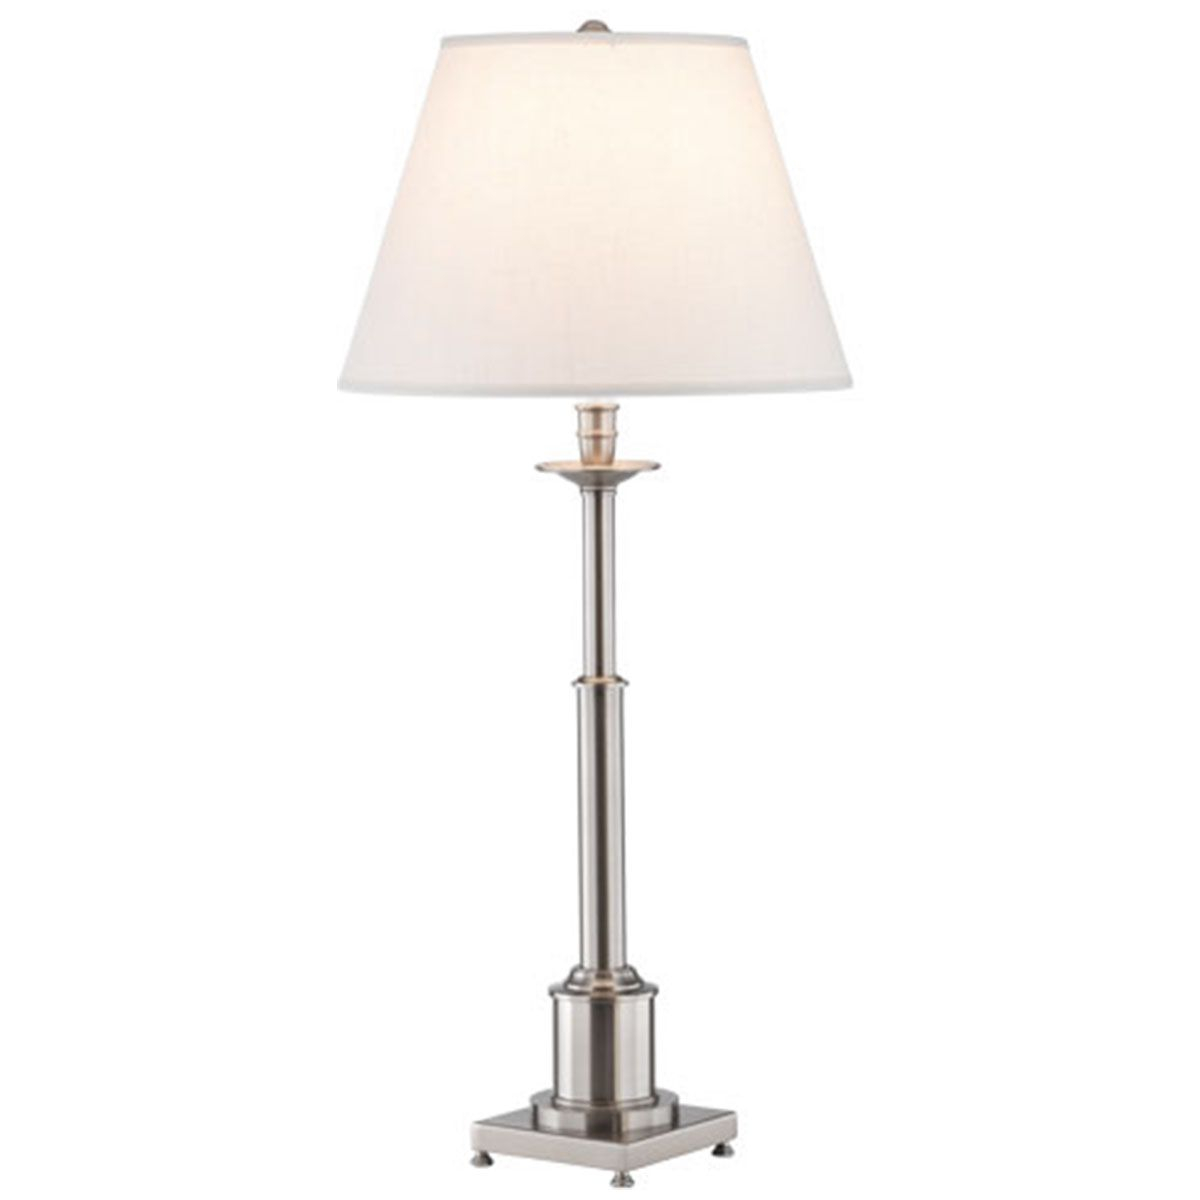 Robert Abbey Kinetic Adjustable Column Table Lamp B1503alt within sizing 1200 X 1200